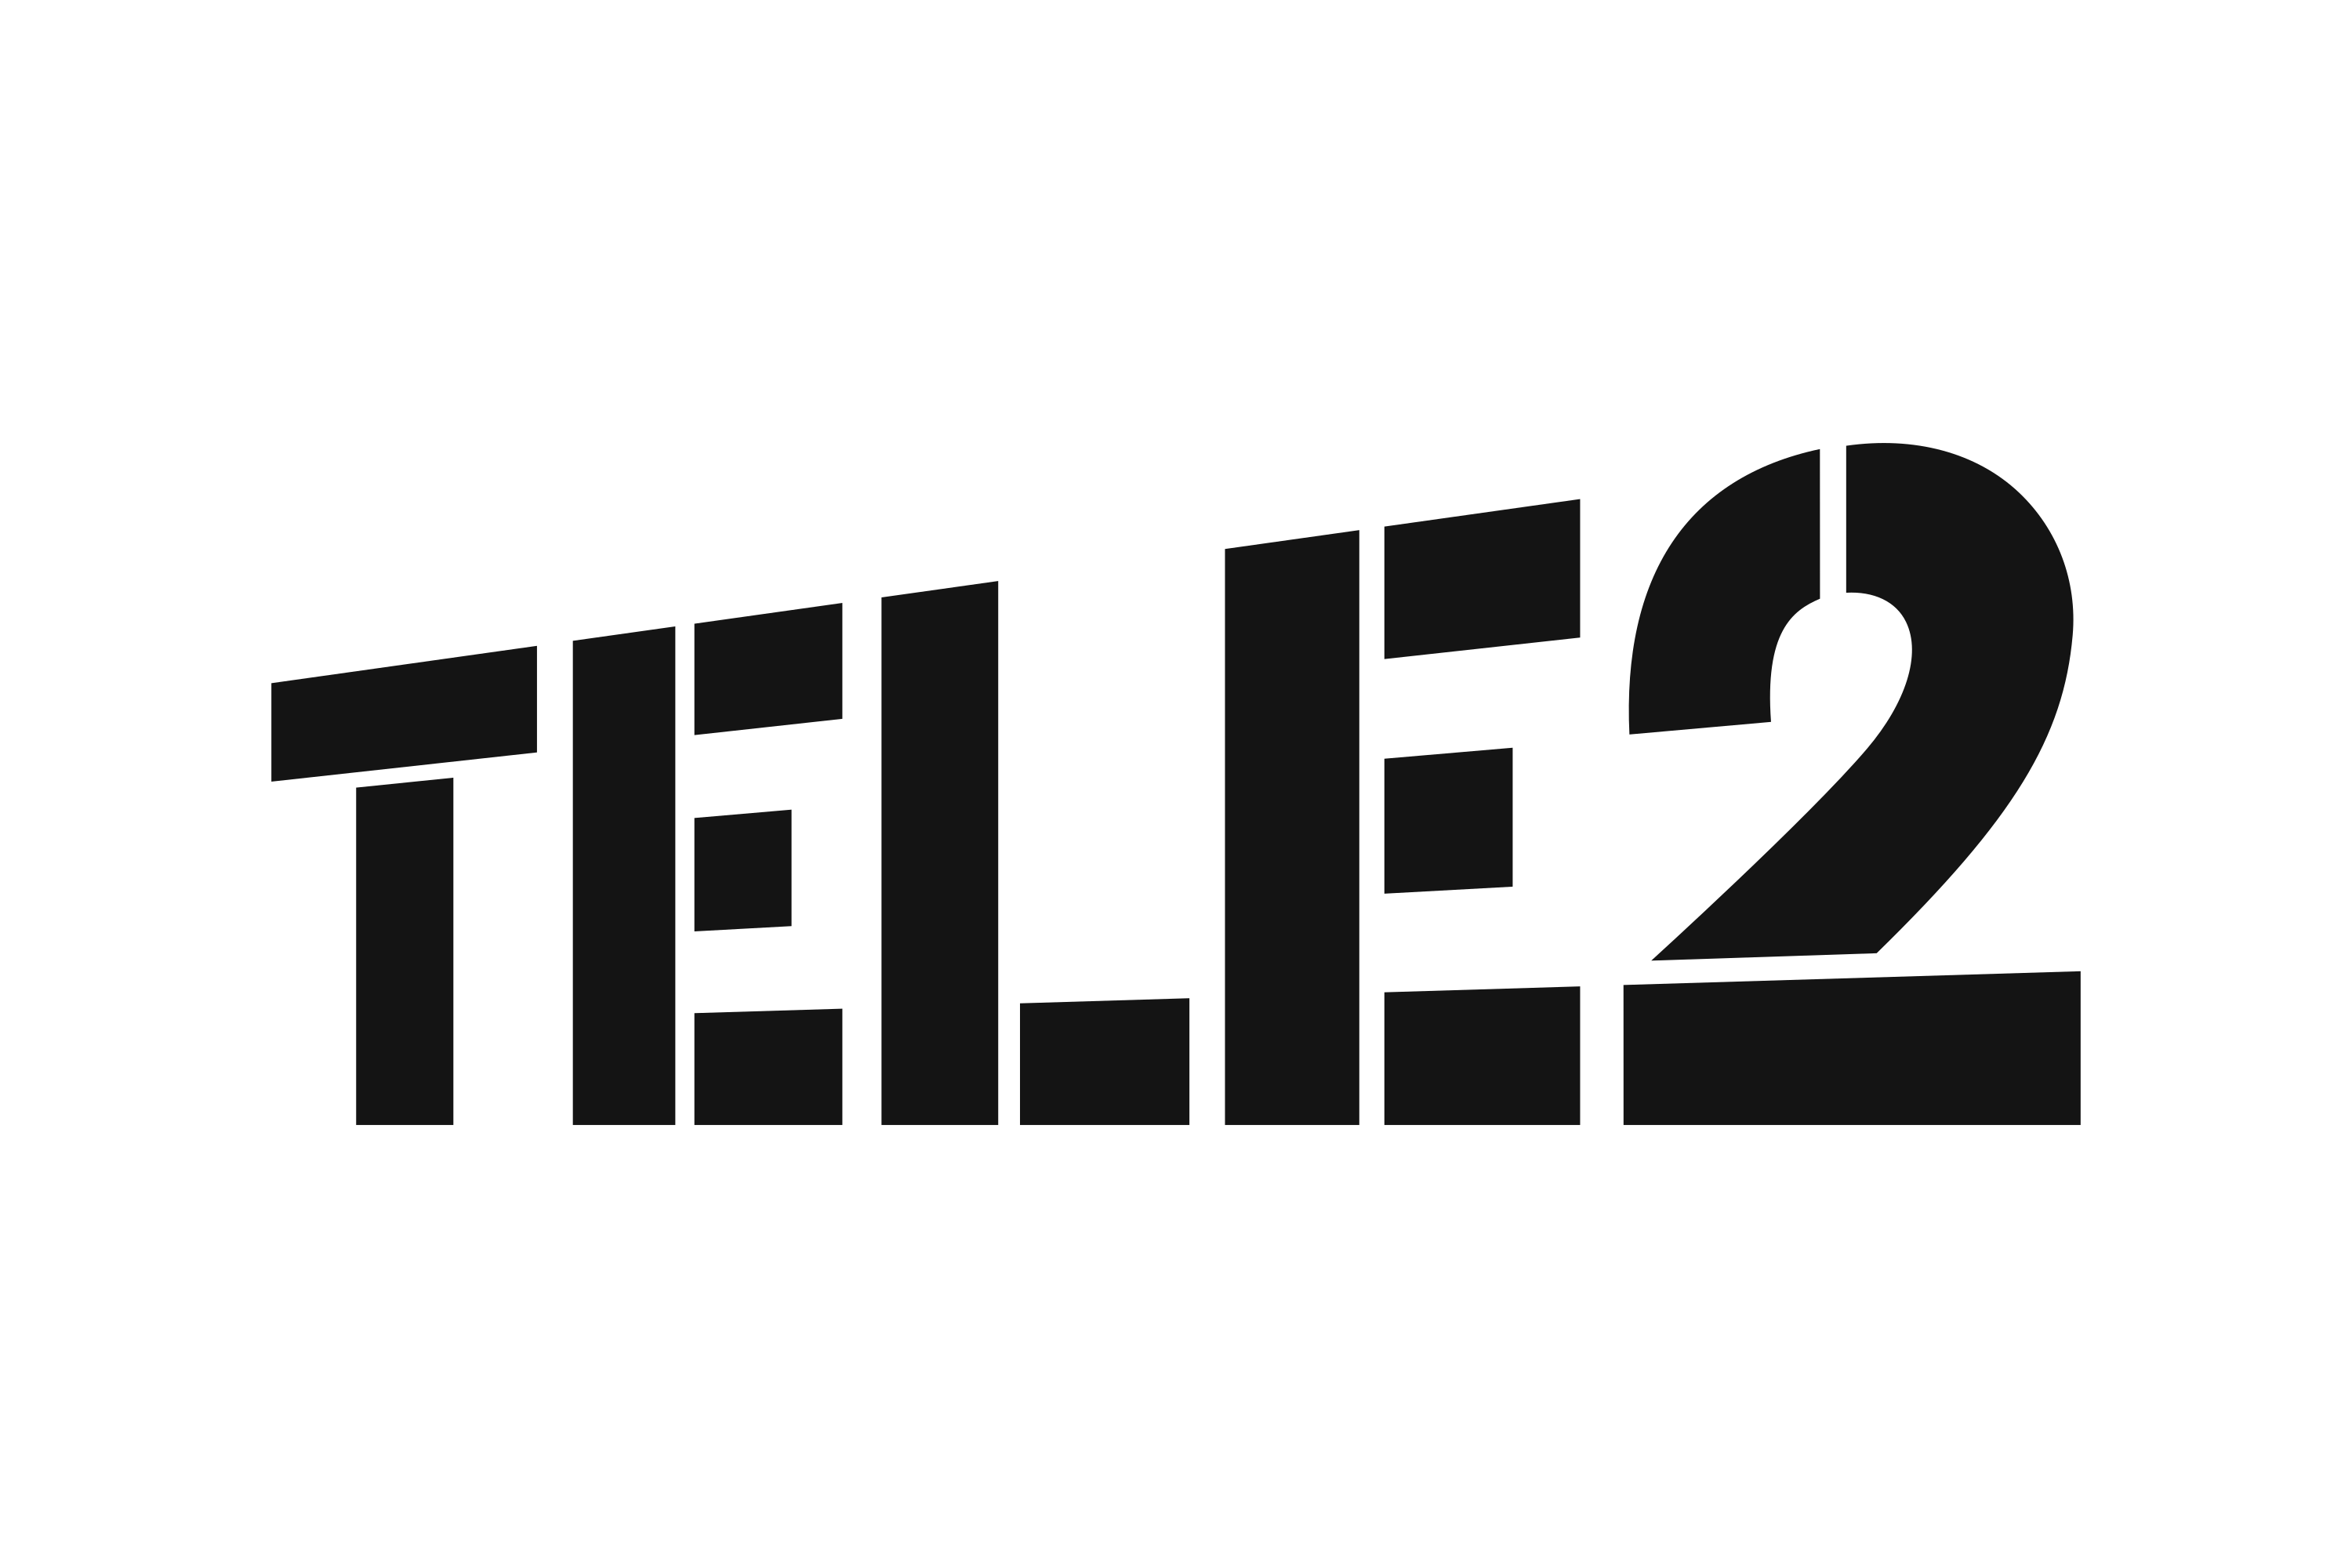 Tele2-Logo.wine